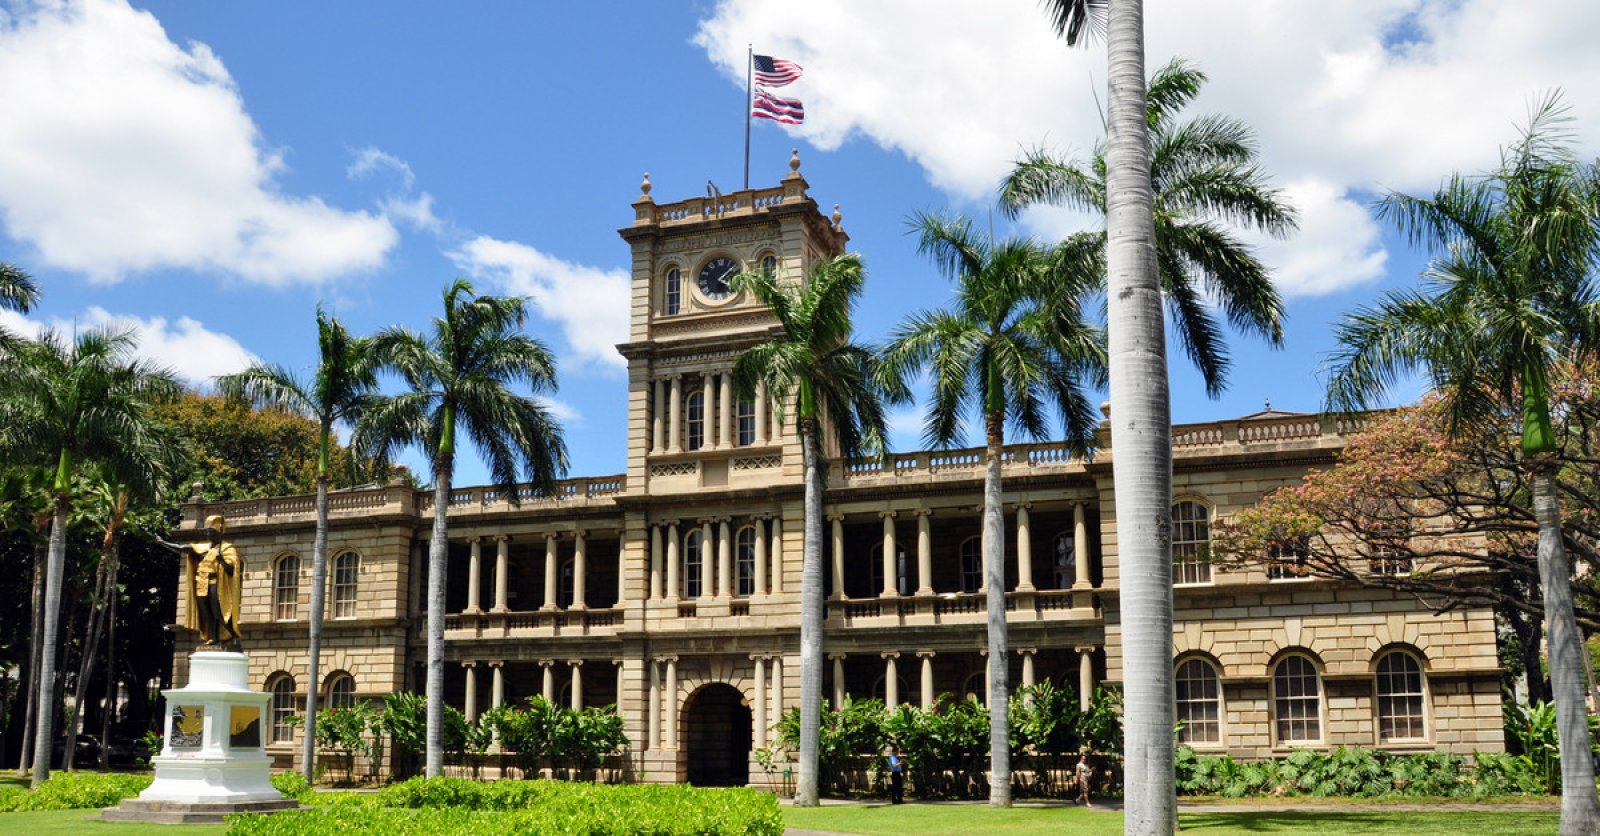 Iolani Palace was the official residence of Hawaiian royality